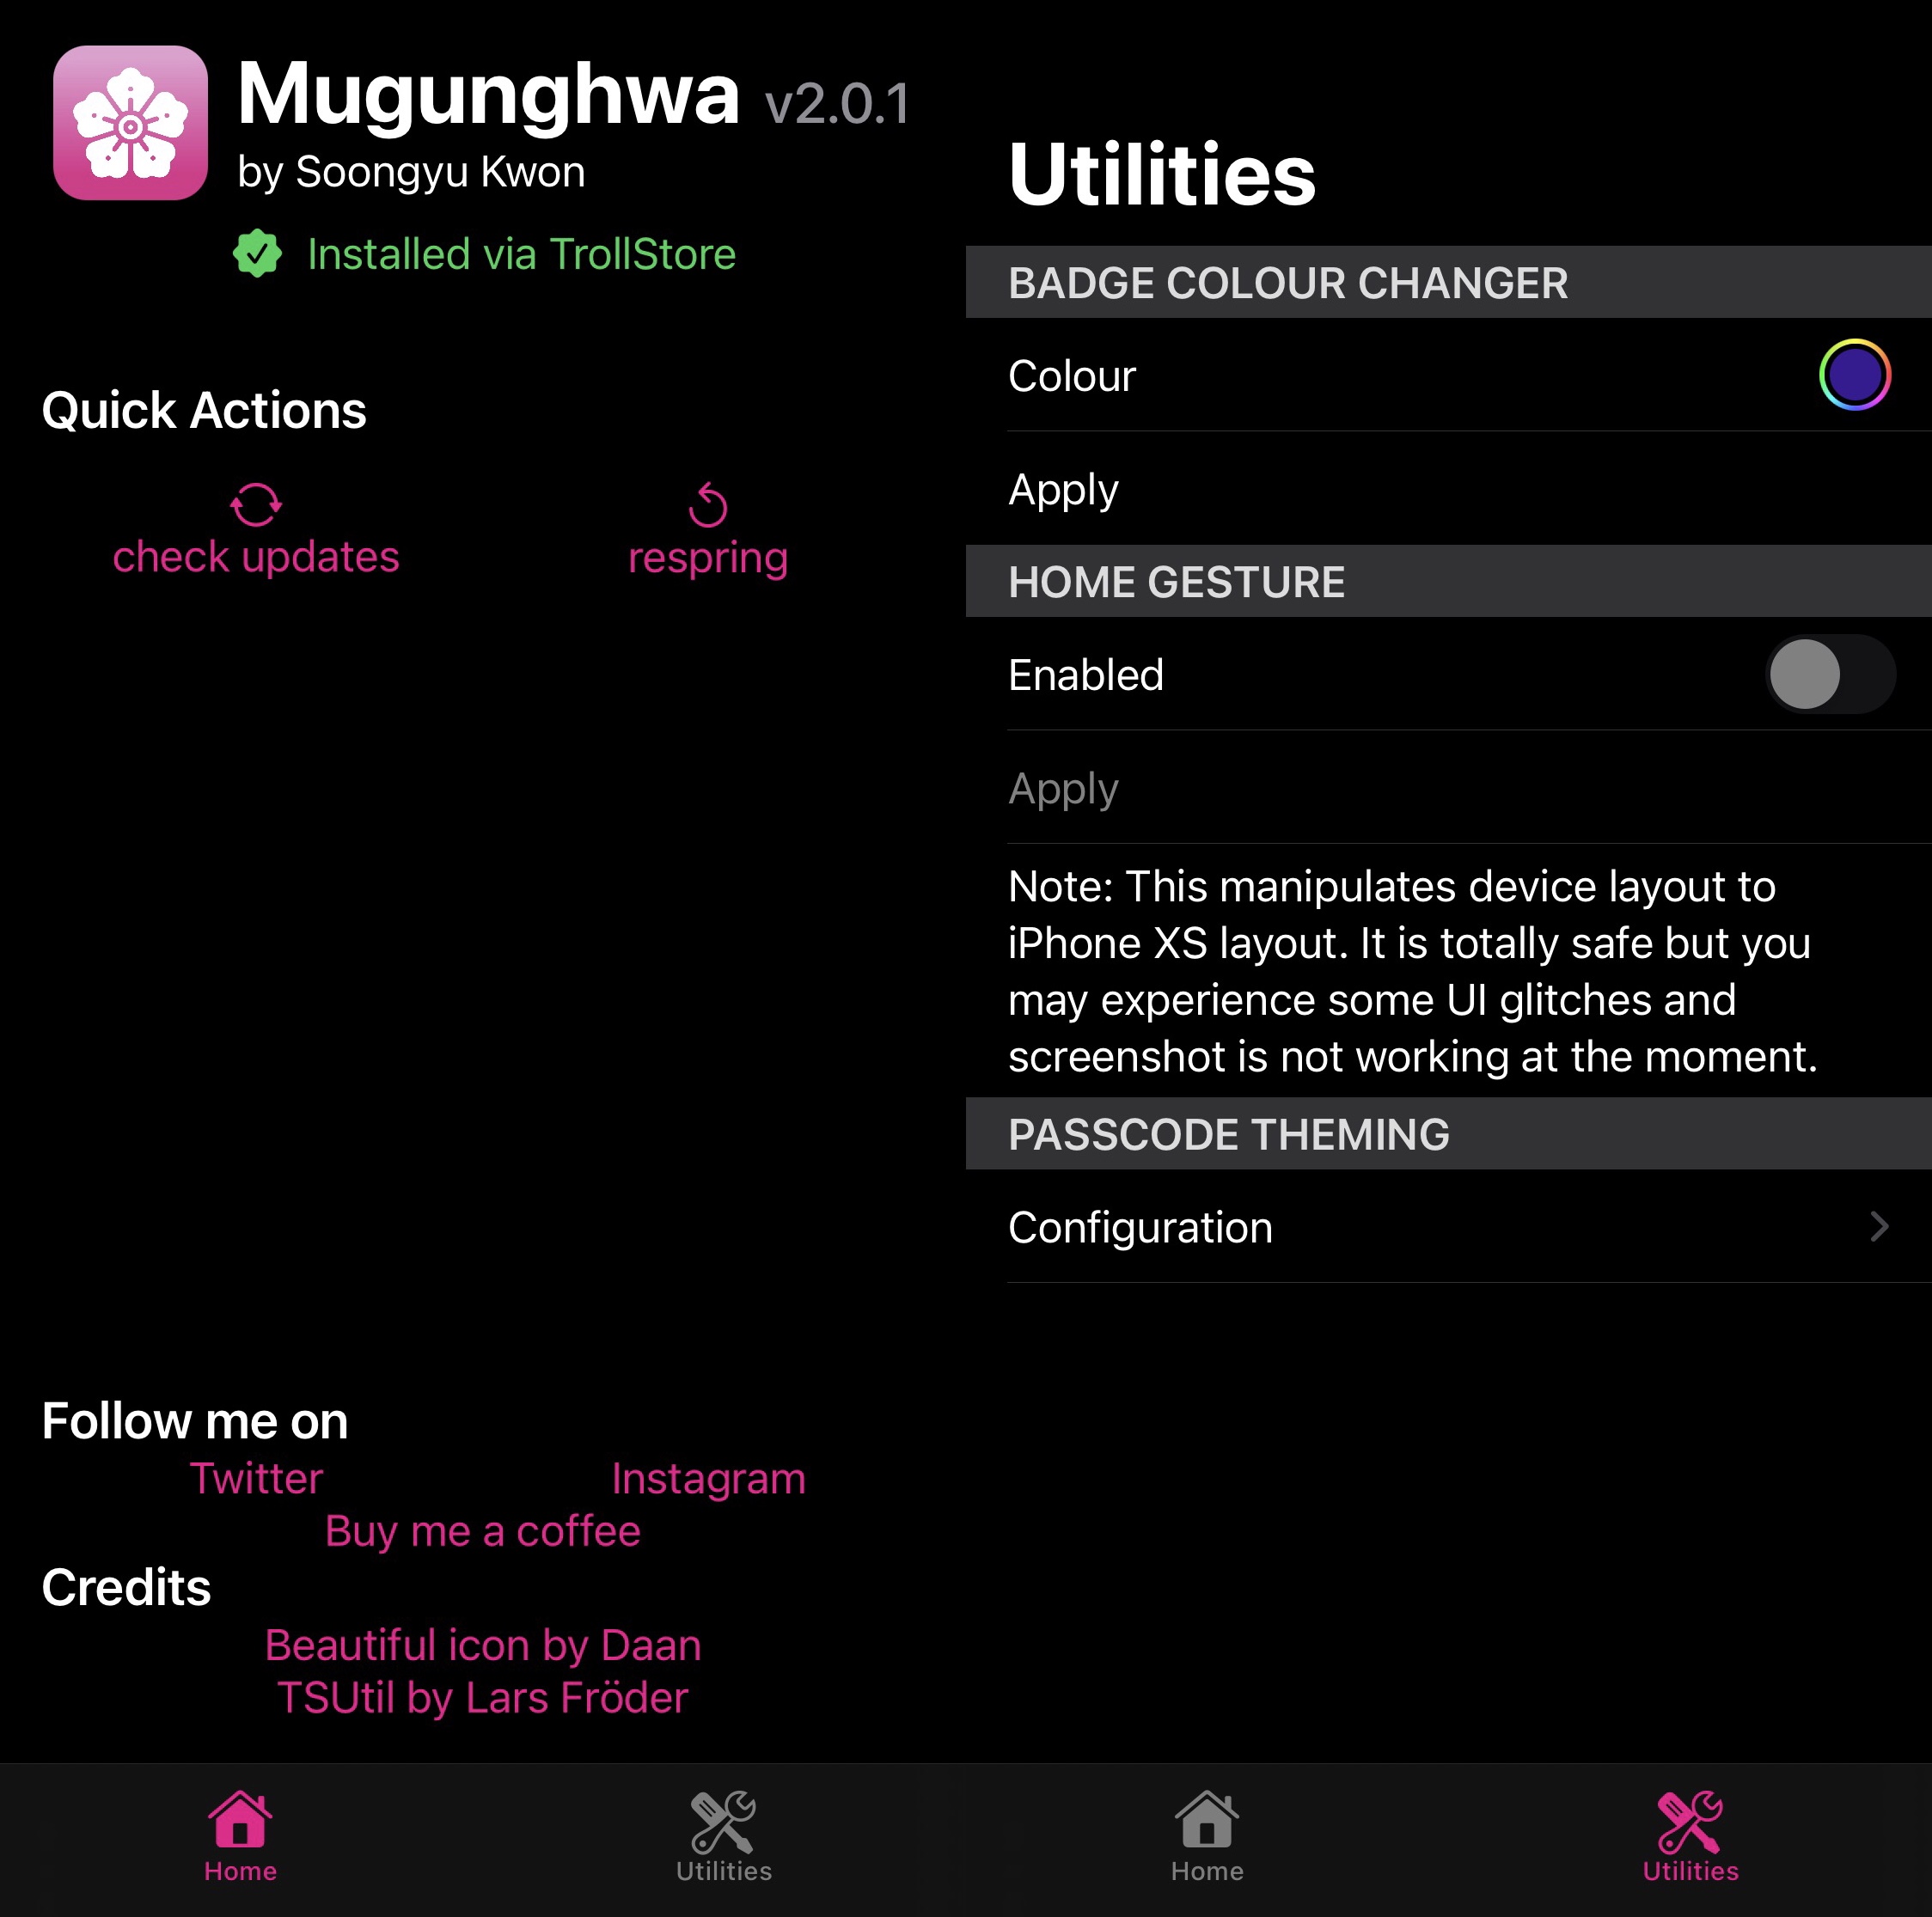 Mugunghwa options to configure.